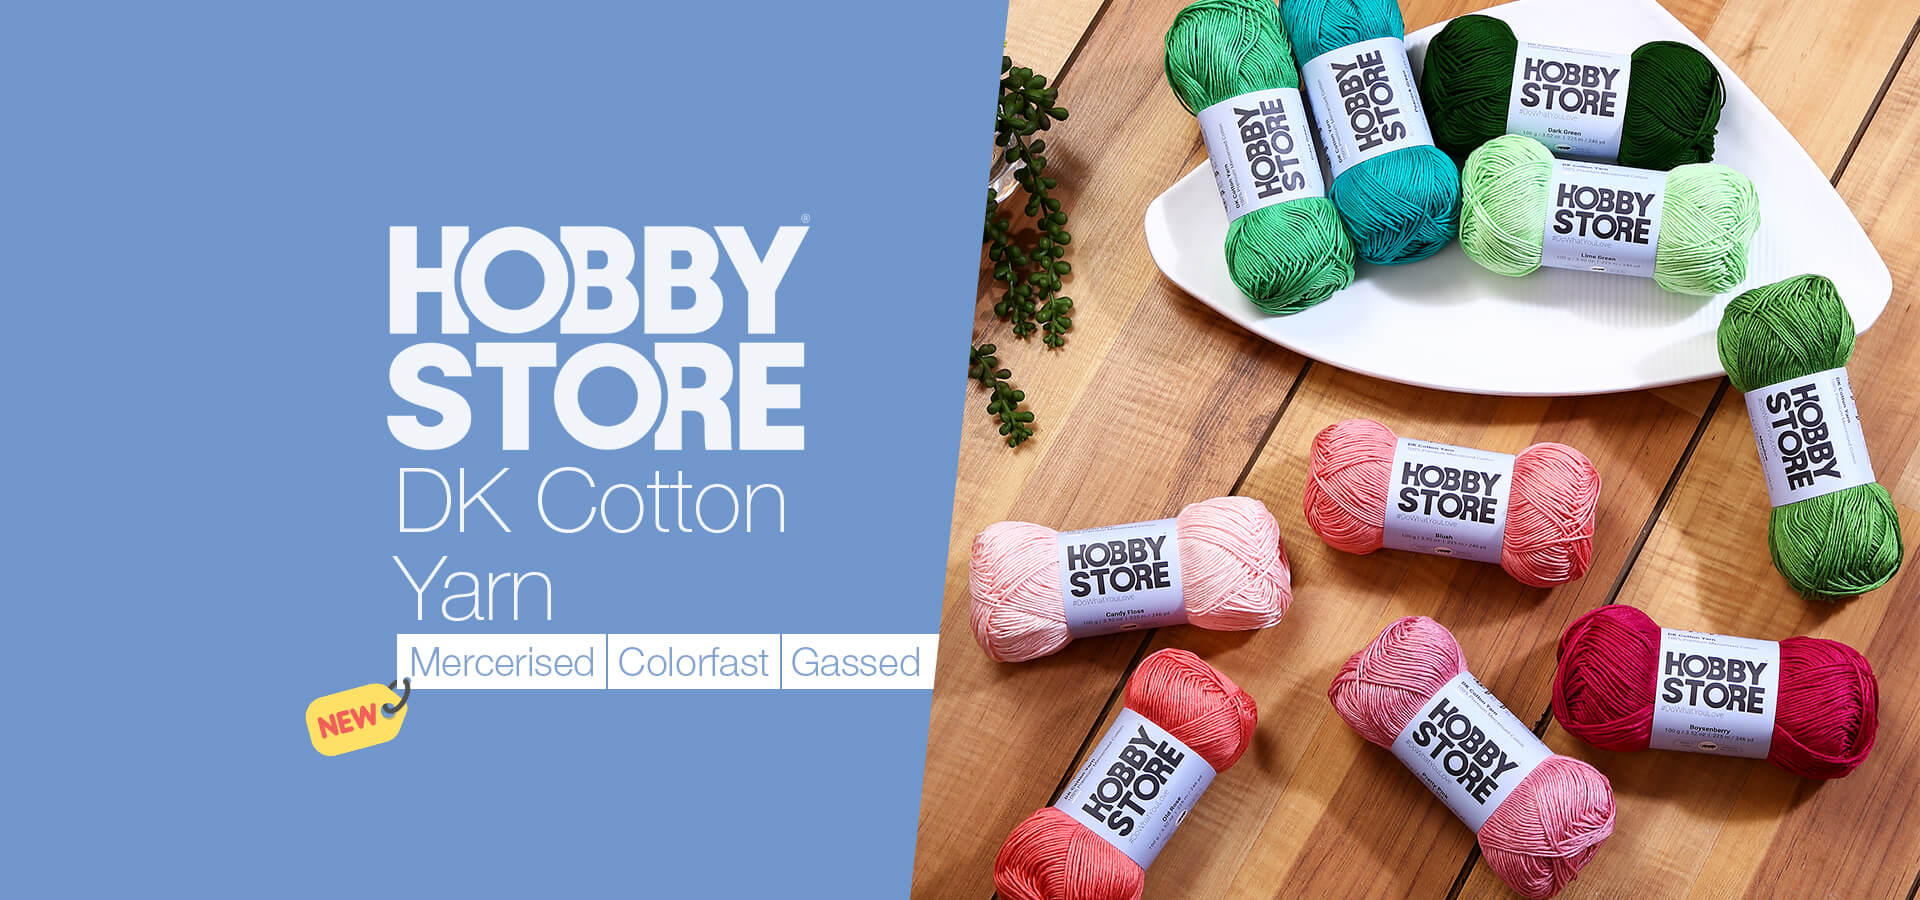 DK Mercerised Cotton Yarn by Hobby Store